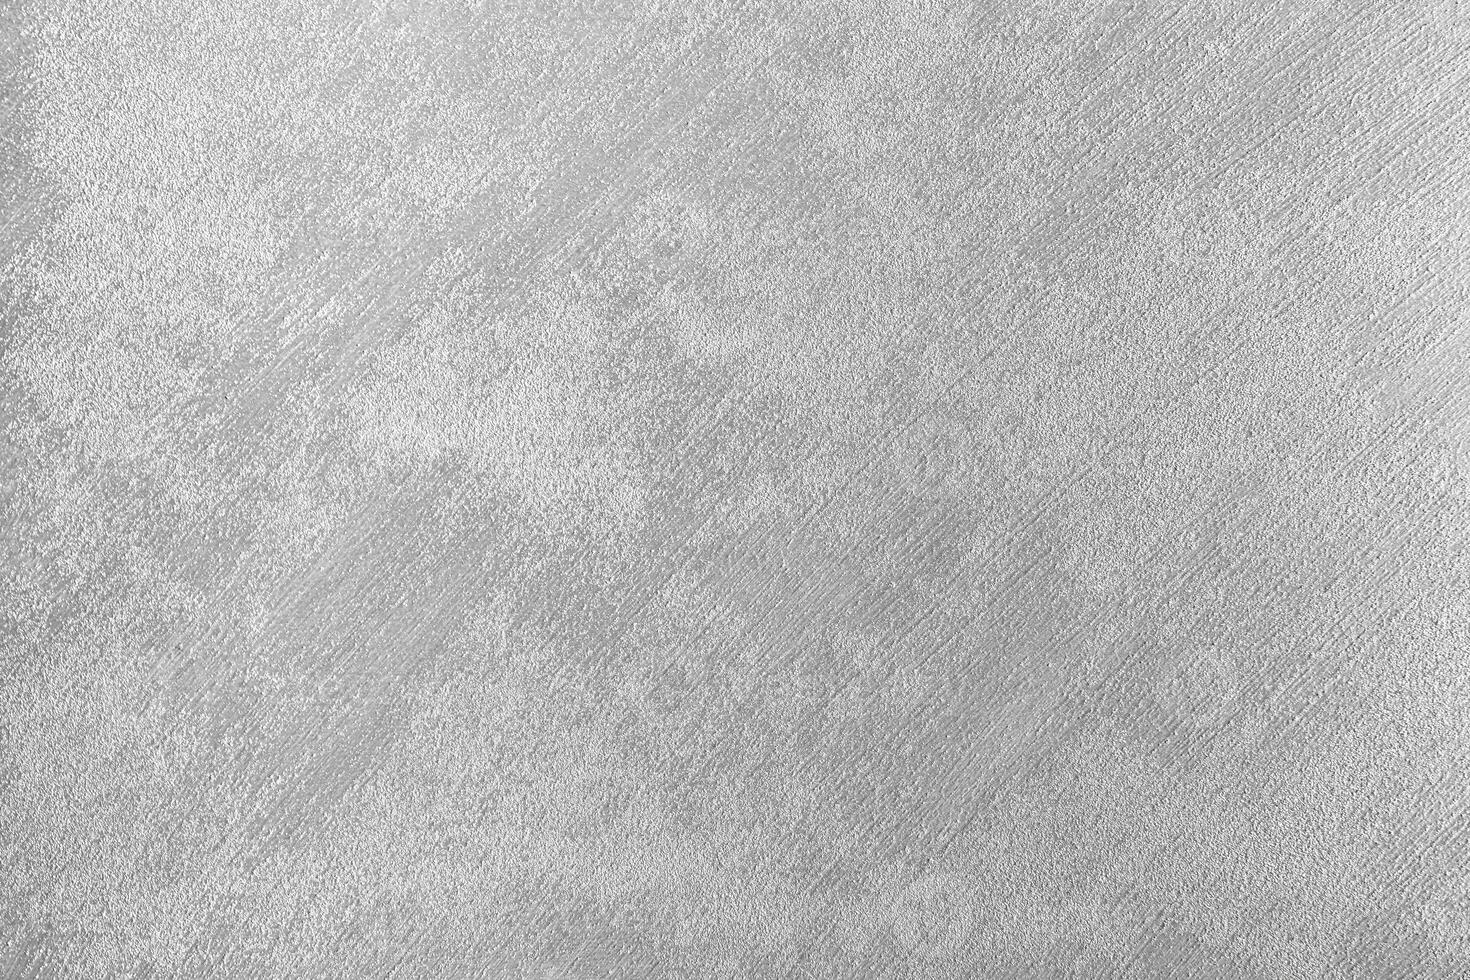 Texture of gray decorative plaster or concrete. photo